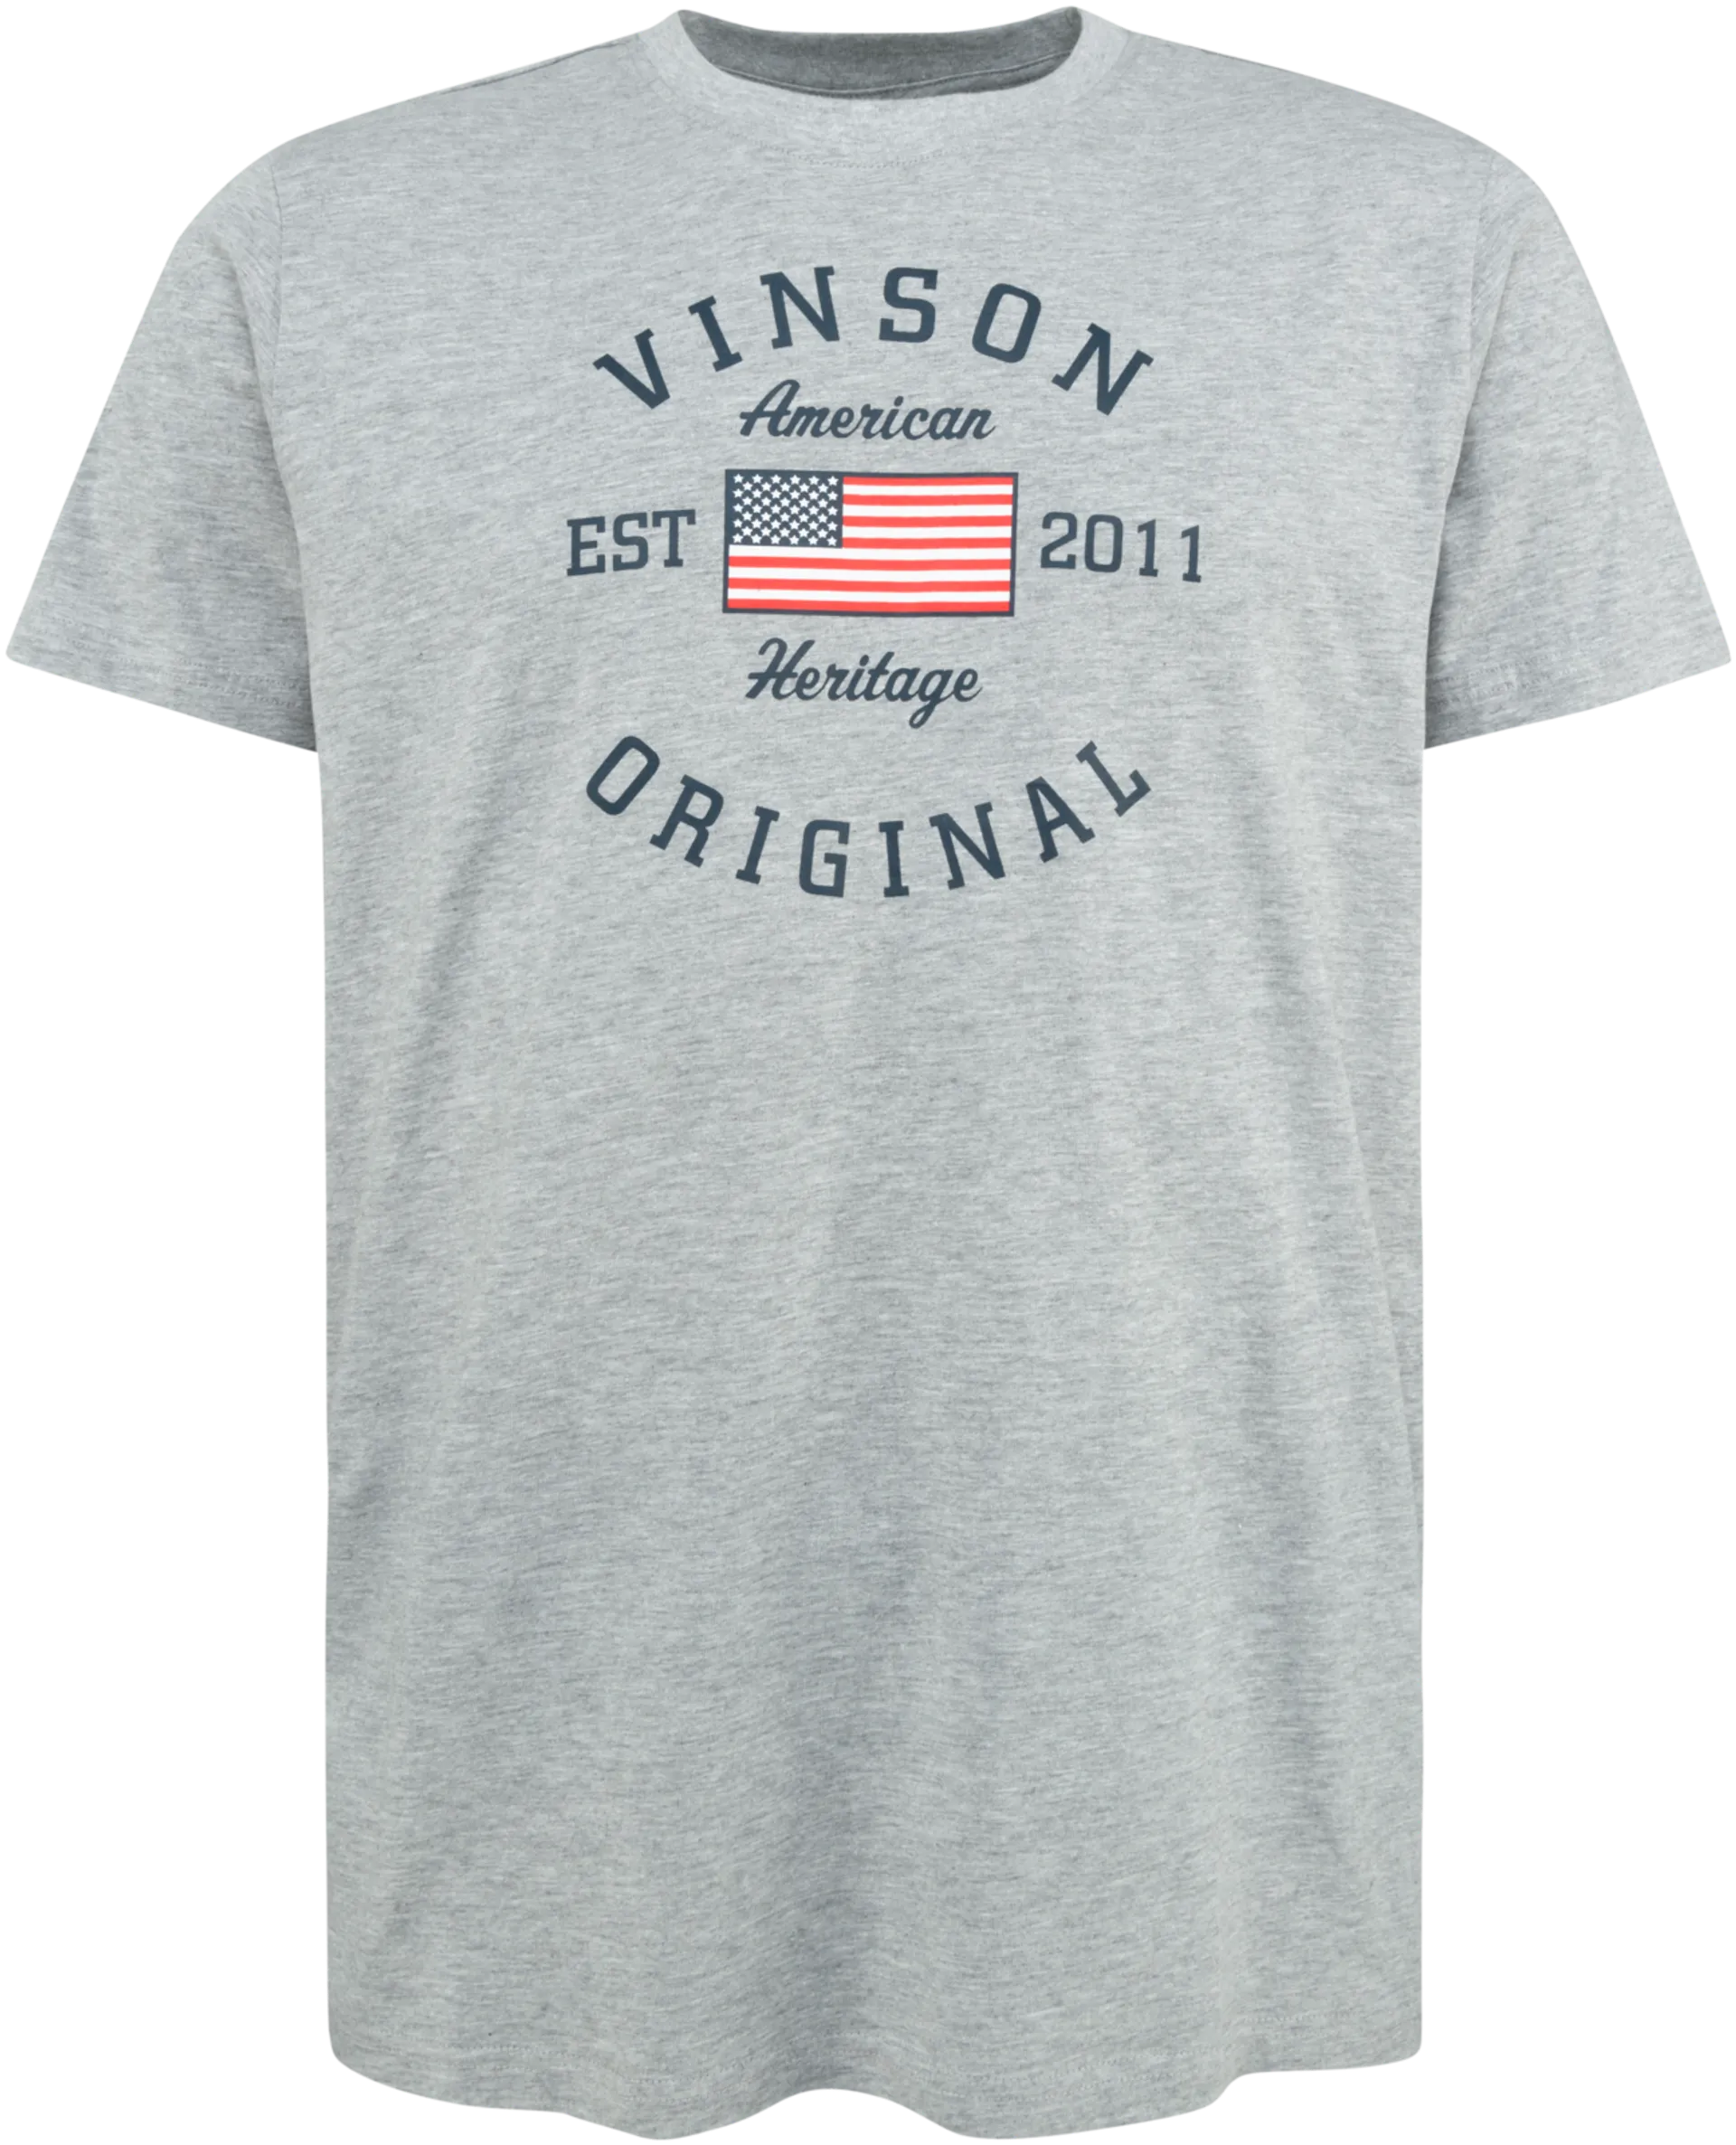 Vinson miesten T-paita Kaleb 104484 - Grey melange - 1